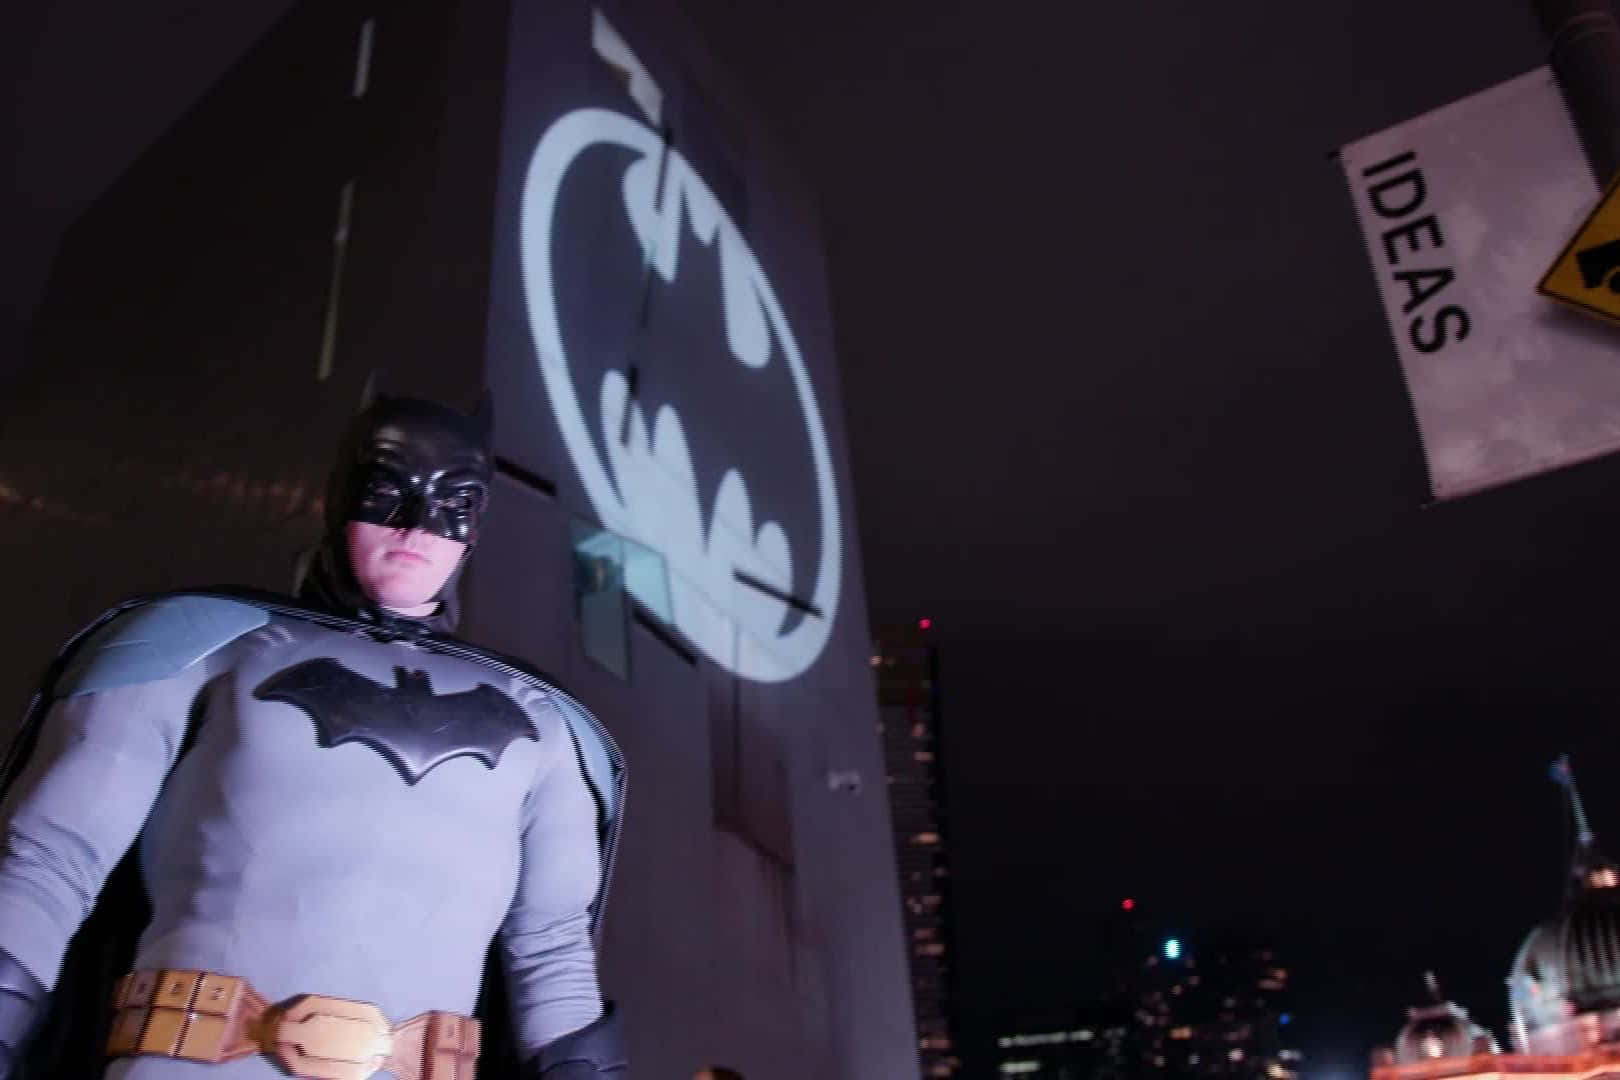 The Iconic Bat Signal Lighting Up The Night Sky Background